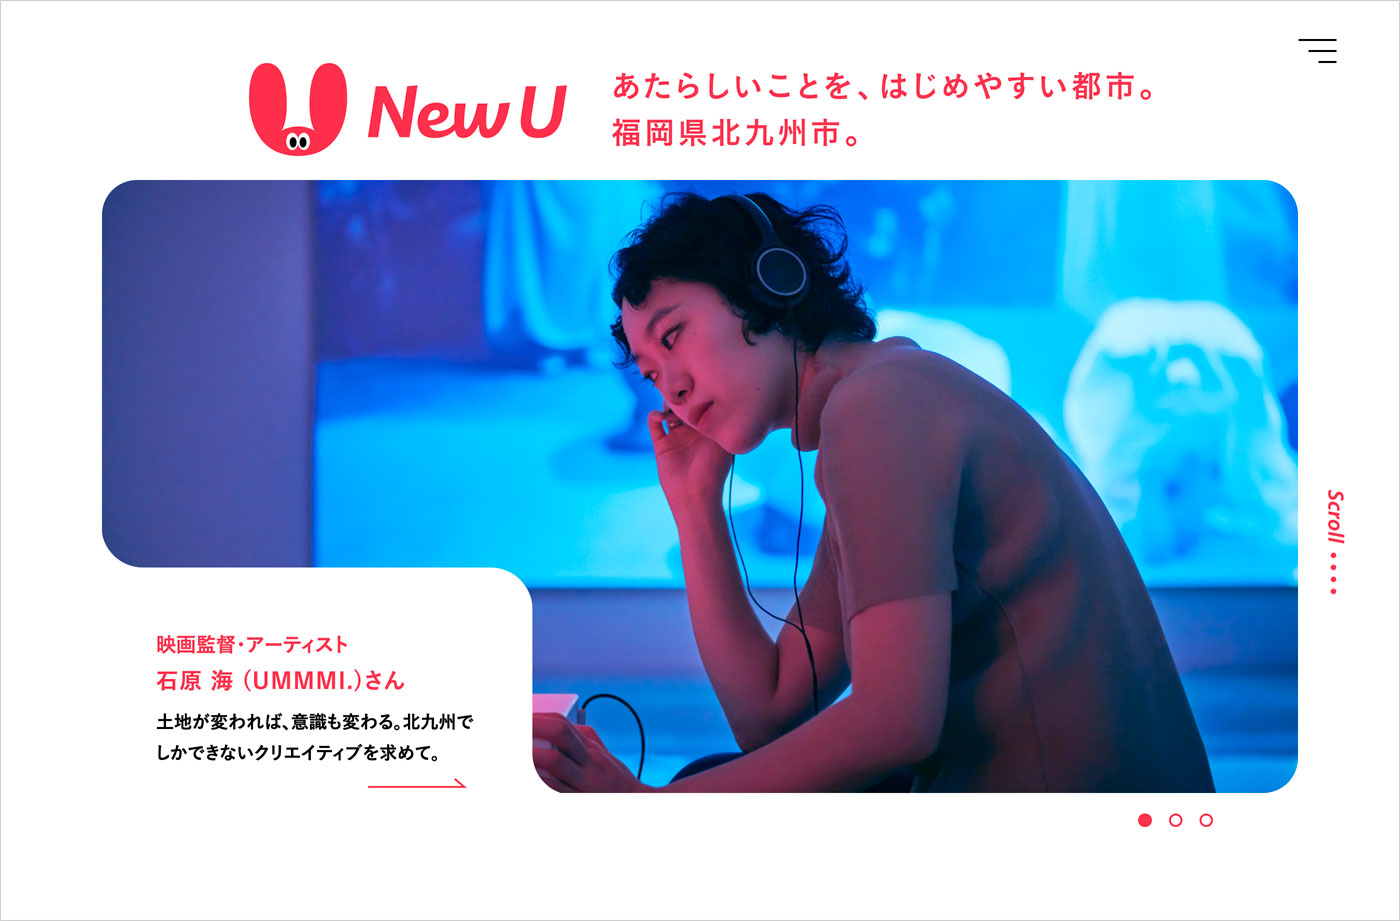 New U（ニューユー）┃あたらしいことを、はじめやすい都市。福岡県北九州市。ウェブサイトの画面キャプチャ画像